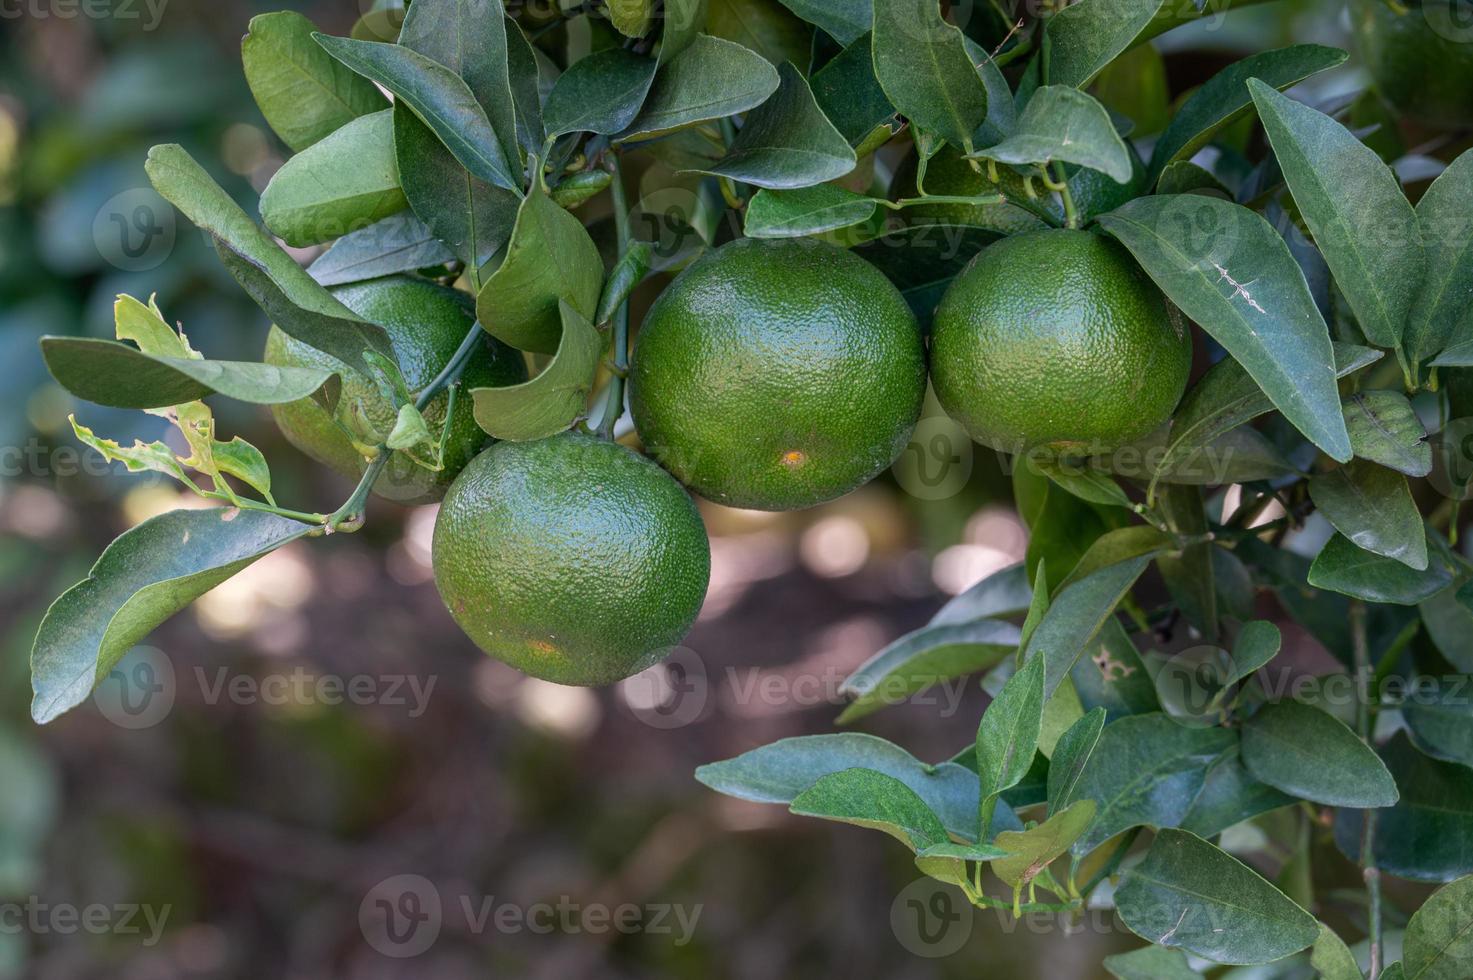 Some immature green oranges on the orange tree photo